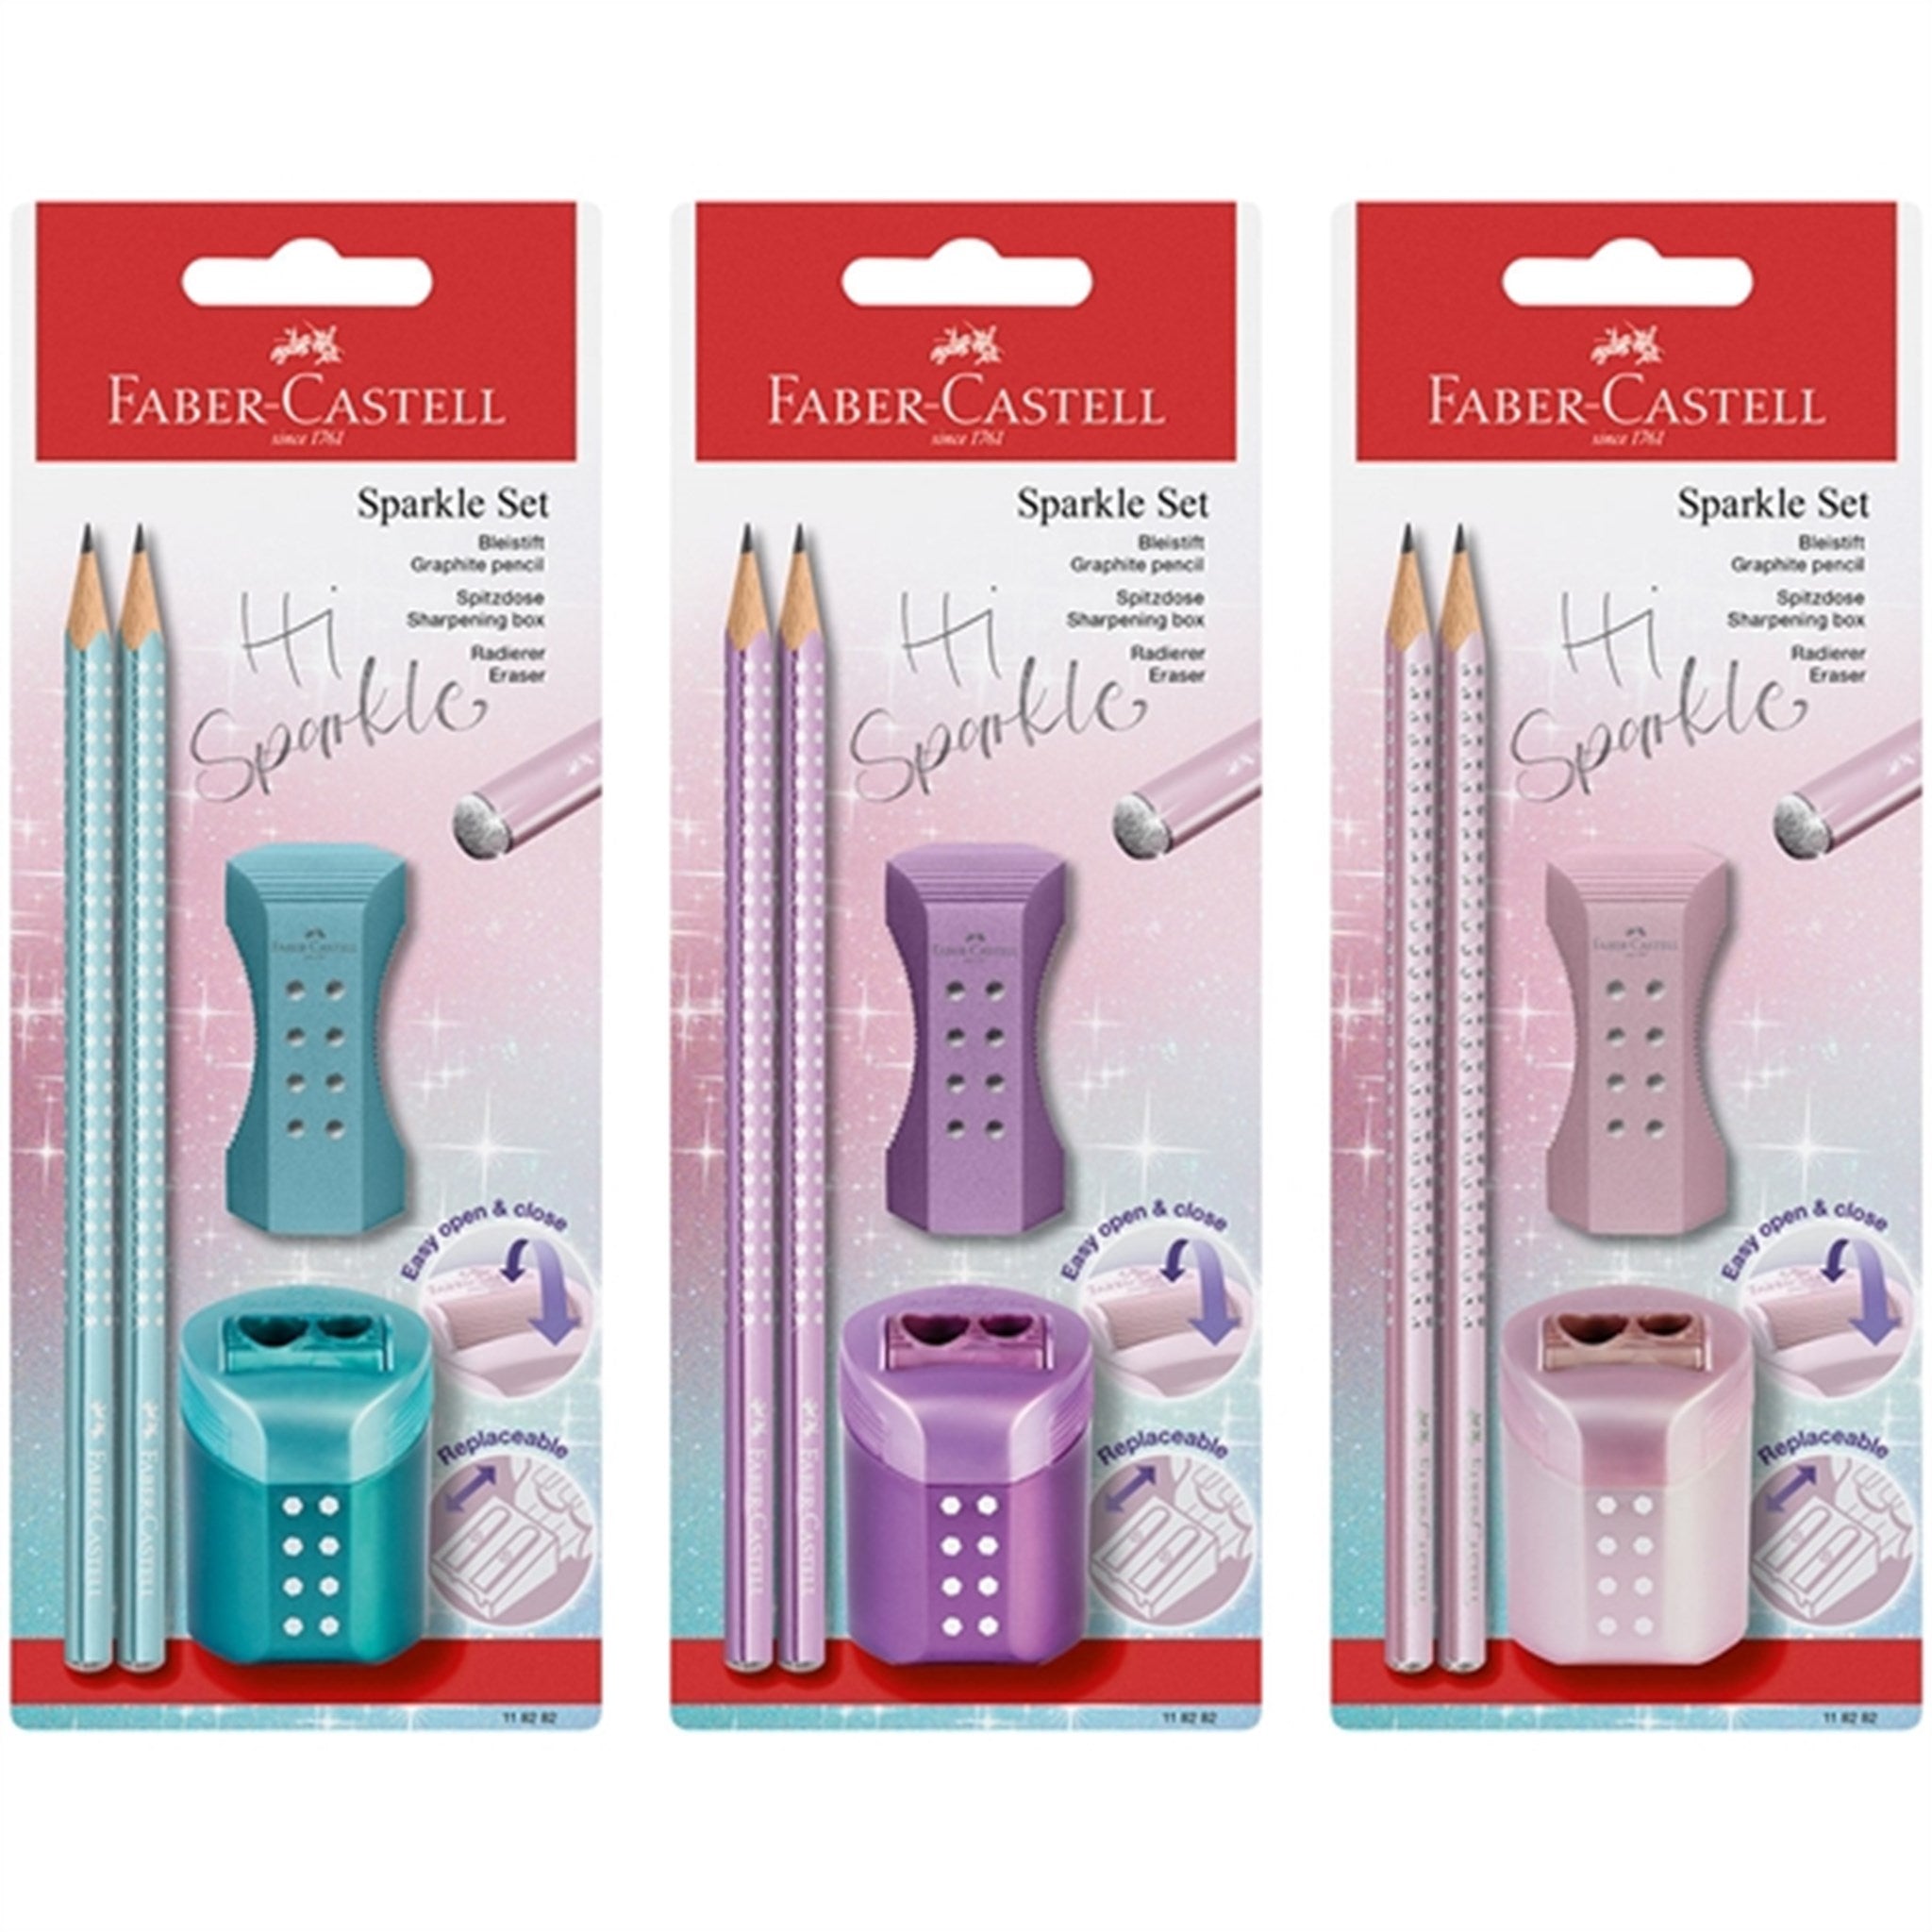 Faber-Castell Sparkle 2 Pencils, Eraser, Pencil Sharpener - Purple 2